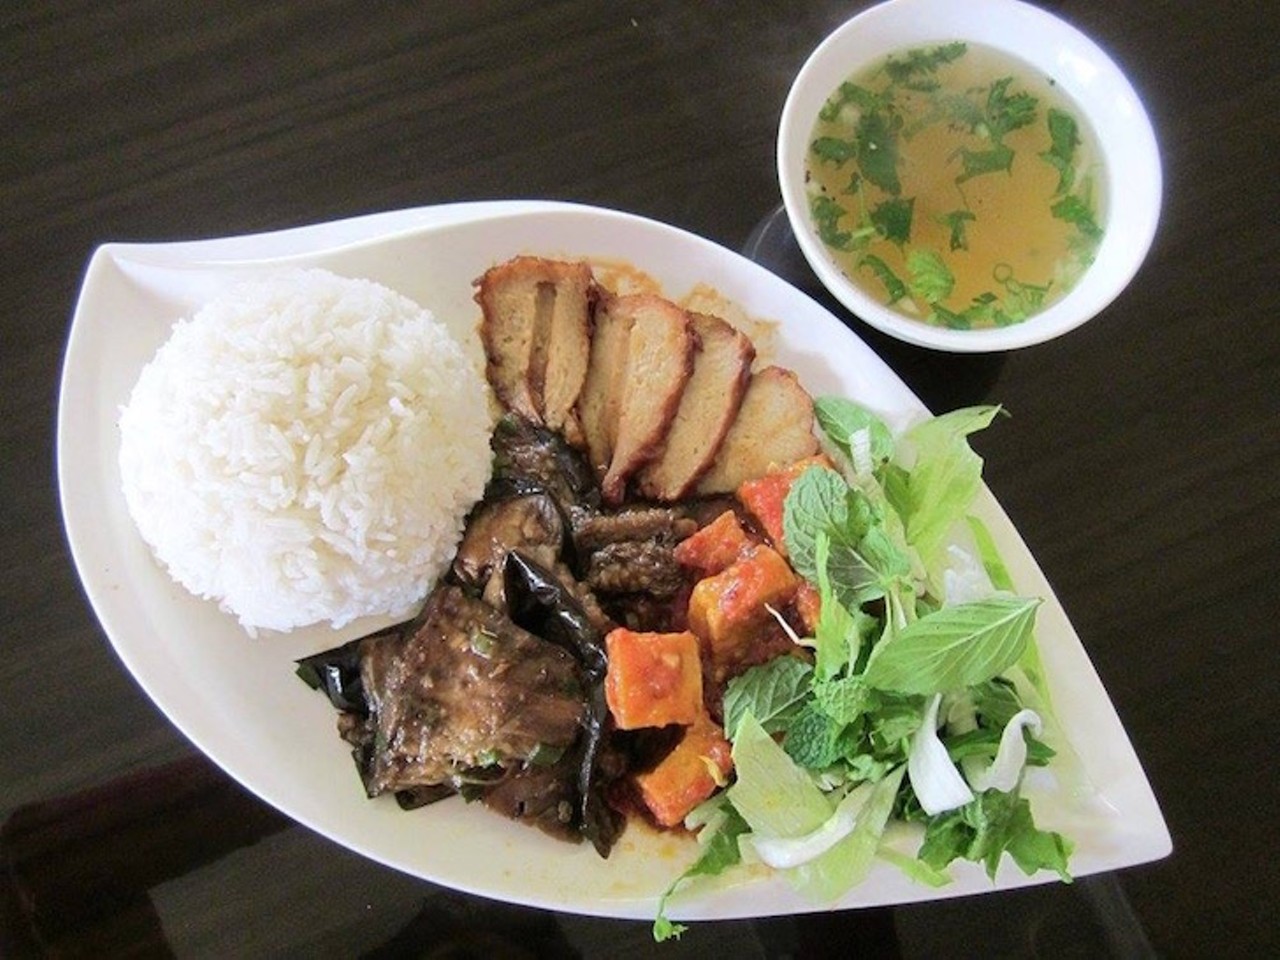 Veggie Garden
1216 E. Colonial Drive, 407-228-1740
This Vietnamese vegan restaurant's menu includes spring rolls, soups and noodles. 
Photo via Veggie Garden/Facebook